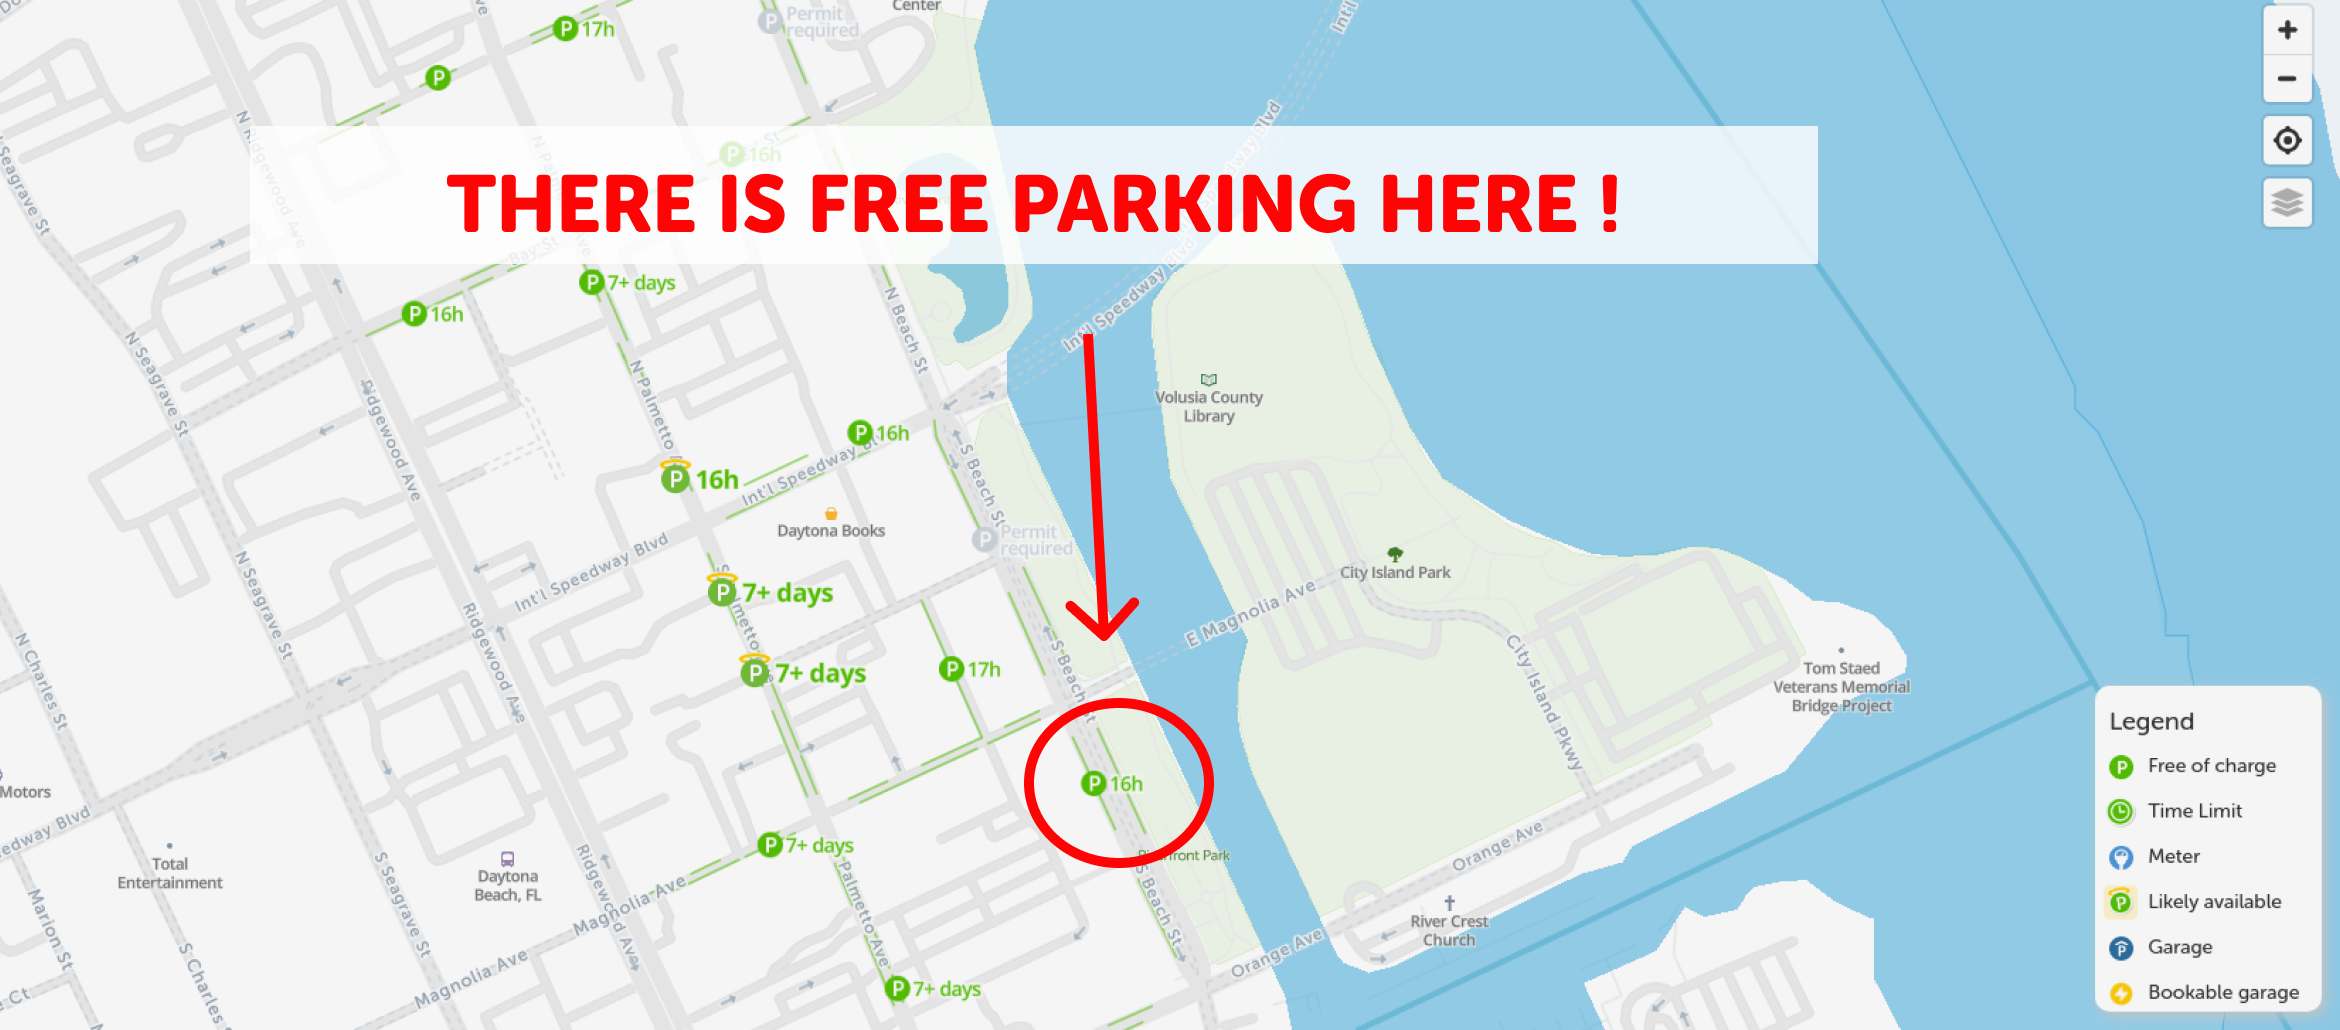 map of free parking in Daytona beach - SpotAngels